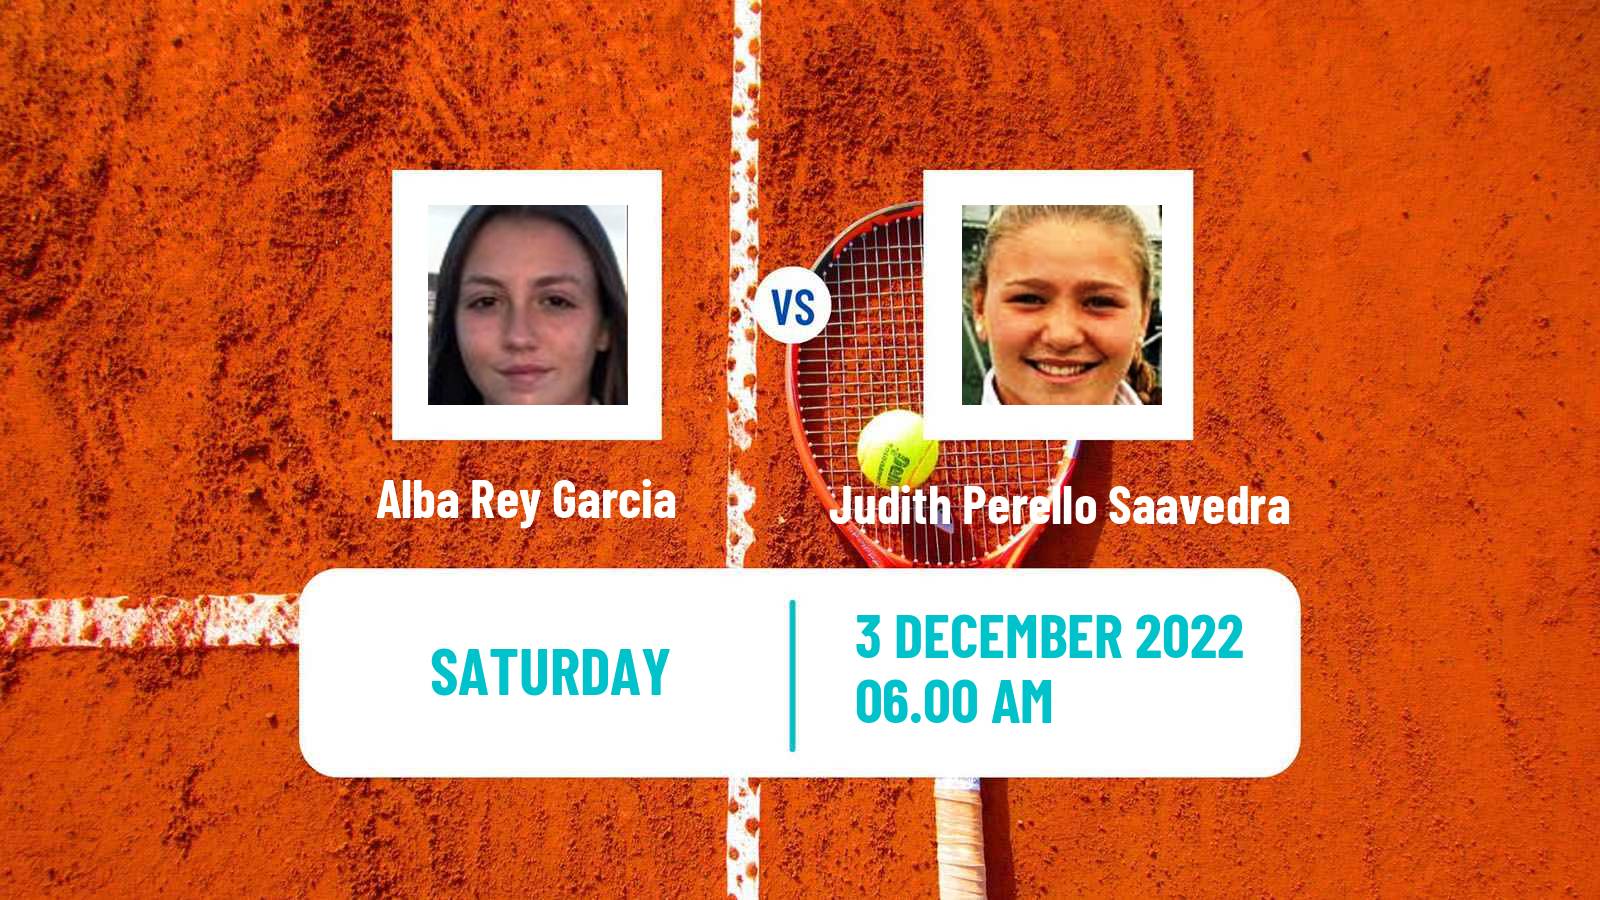 Tennis ITF Tournaments Alba Rey Garcia - Judith Perello Saavedra